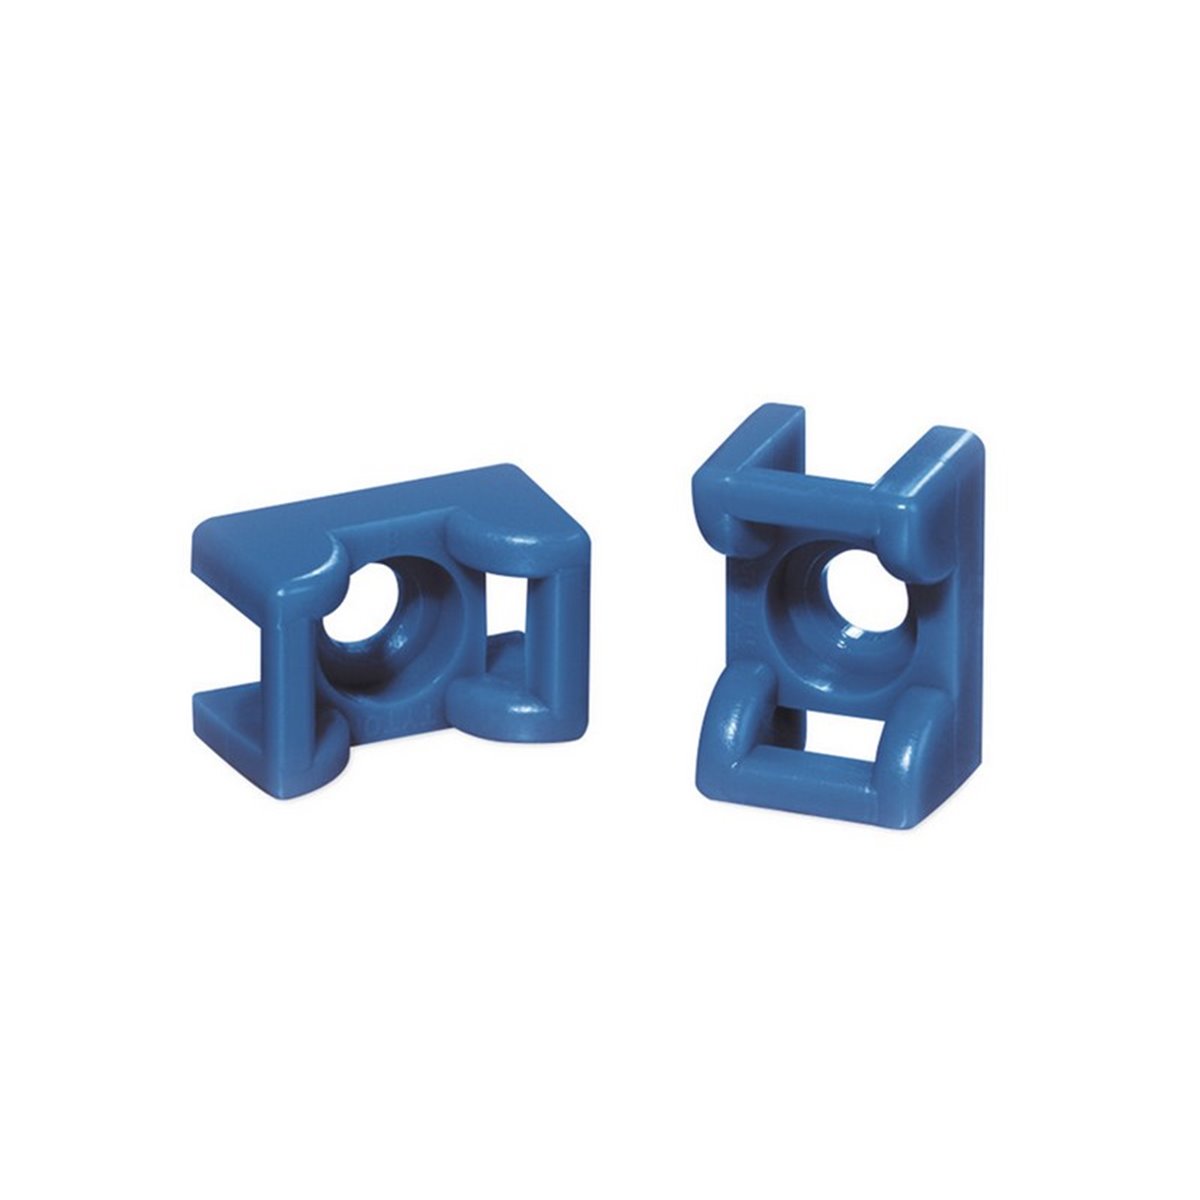 Cable tie mount KR6G5-E/TFE-BU 11.8x18.8mm, blue, 100 pcs. HellermannTyton